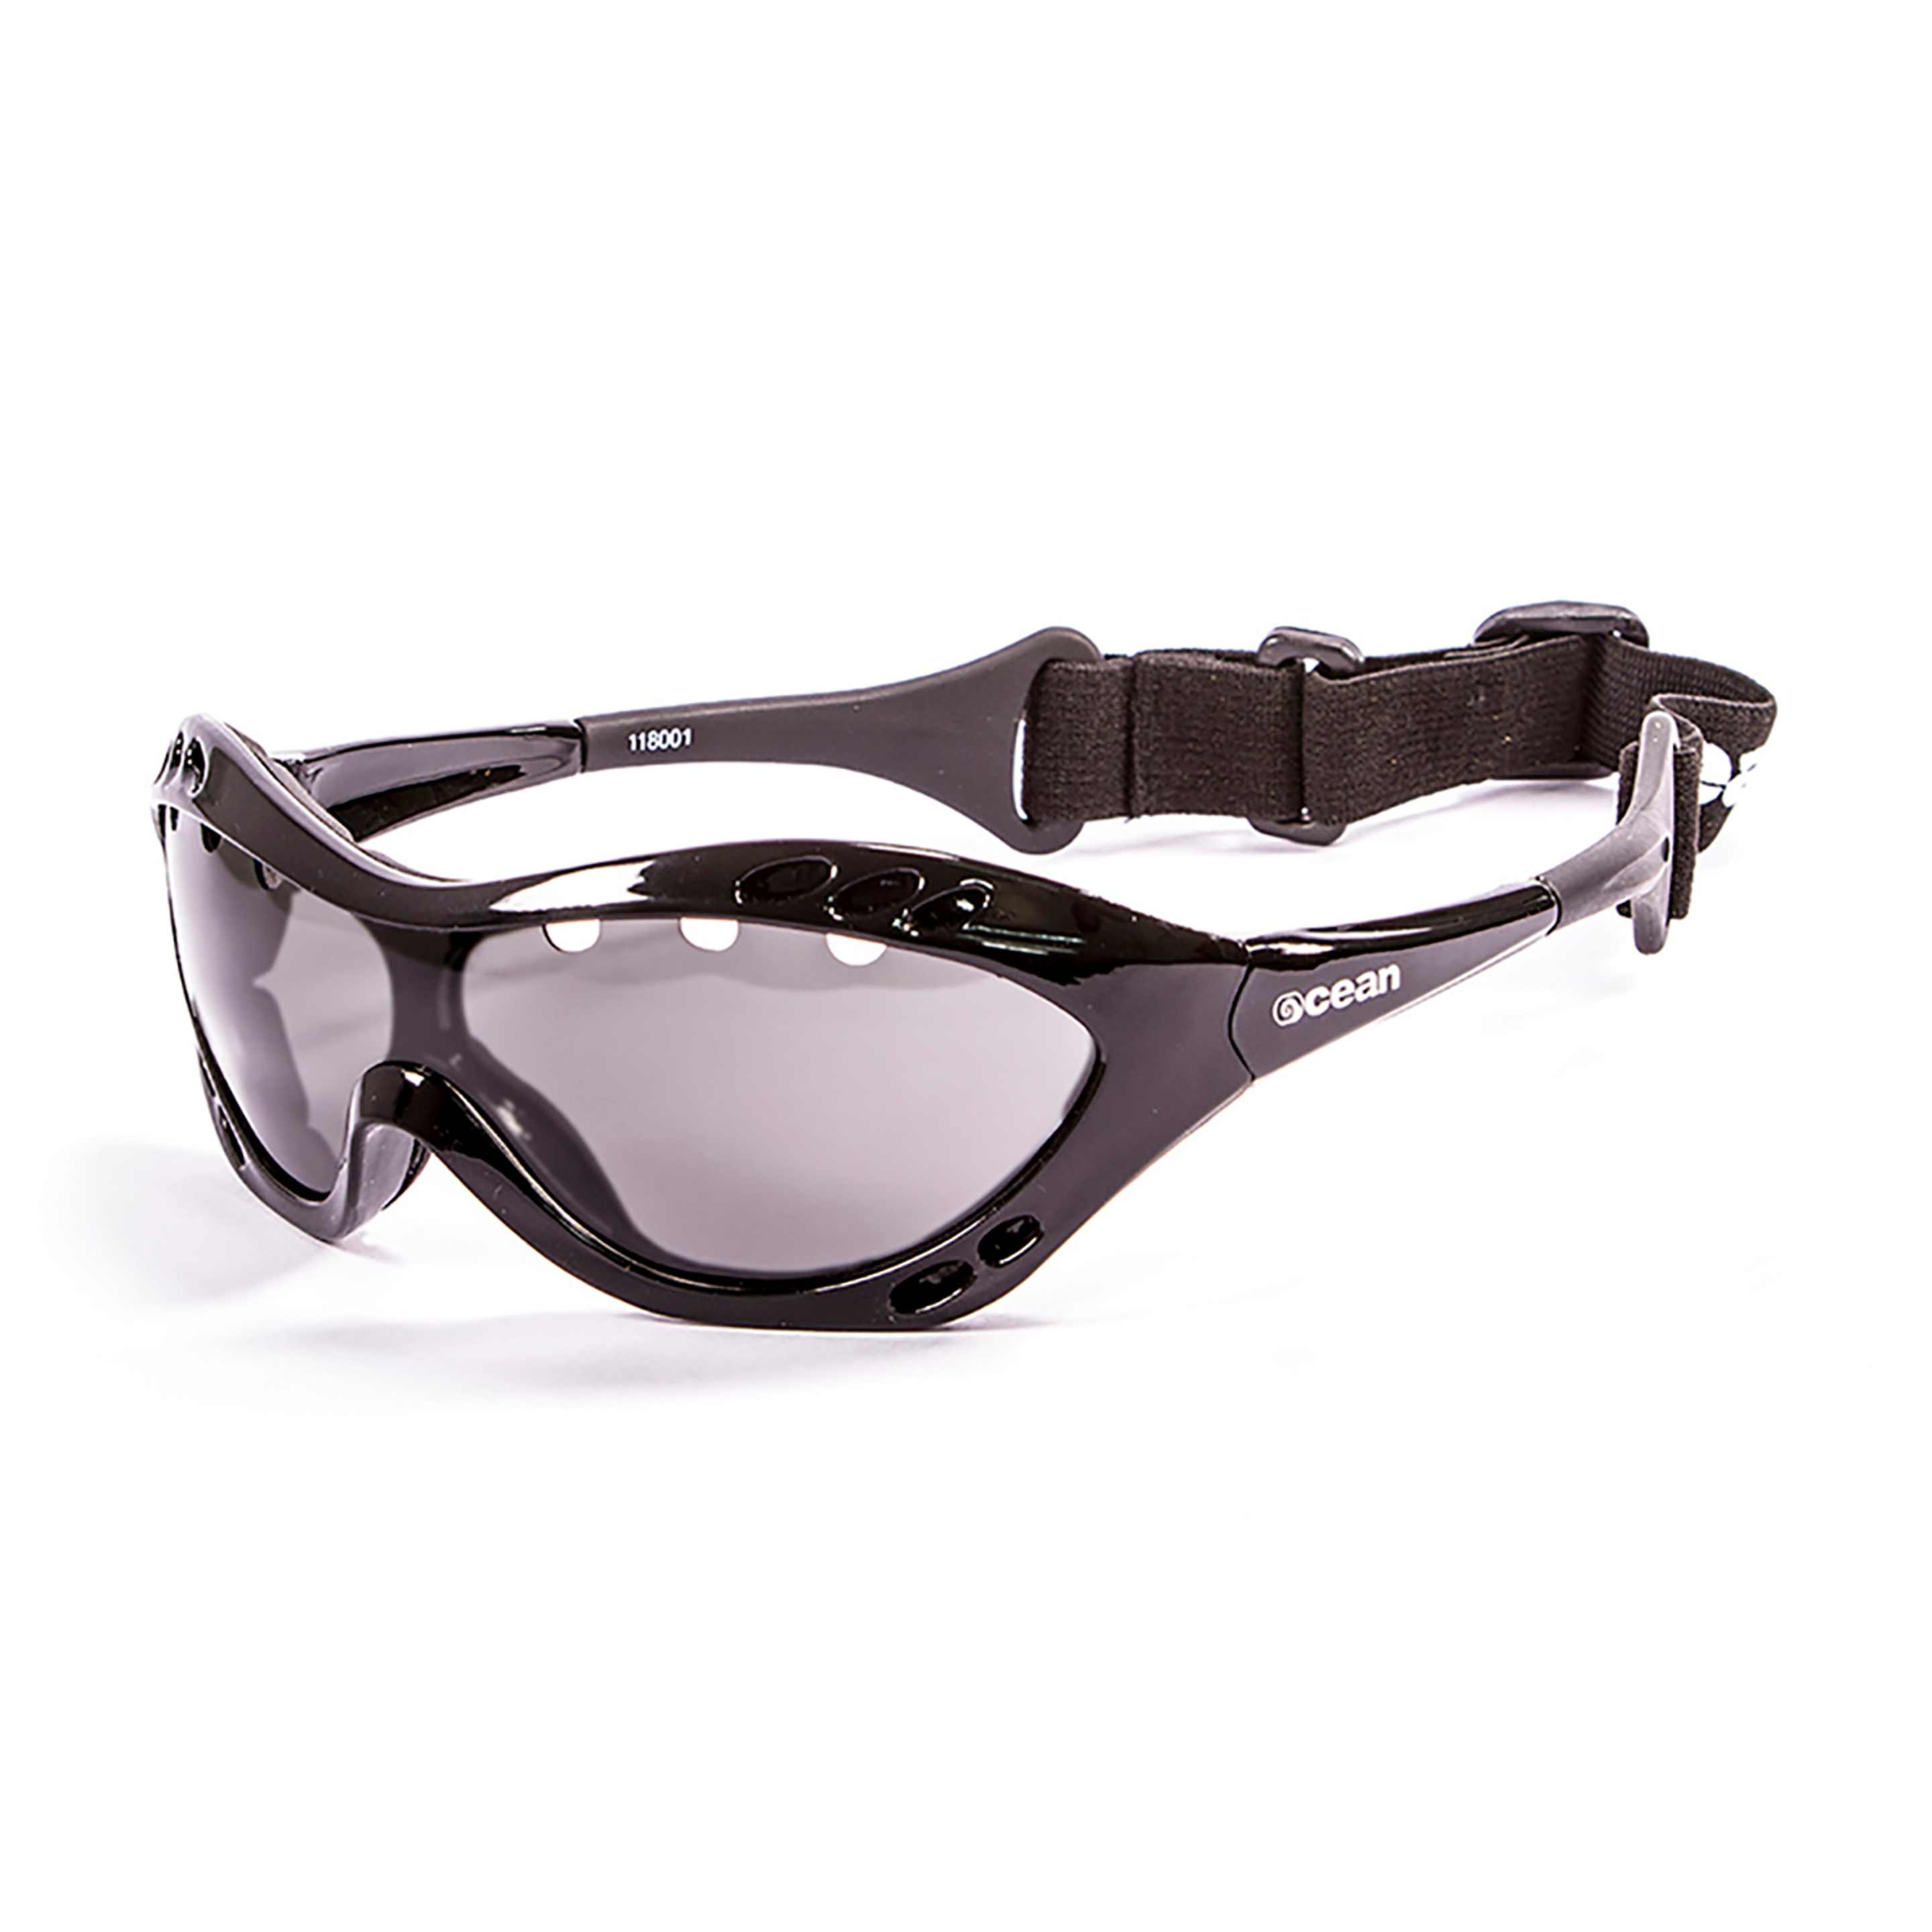 Gafas De Sol Técnicas Para La Práctica De Deportes De Agua  Costa Rica Ocean Sunglasses